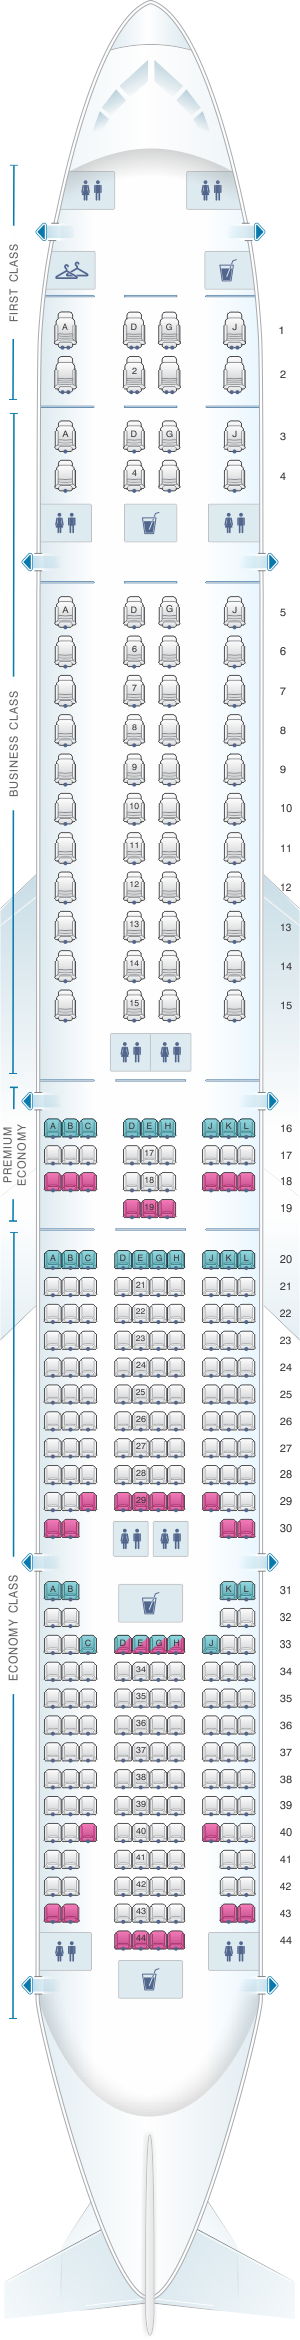 Aa Boeing 777 300er Seat Map